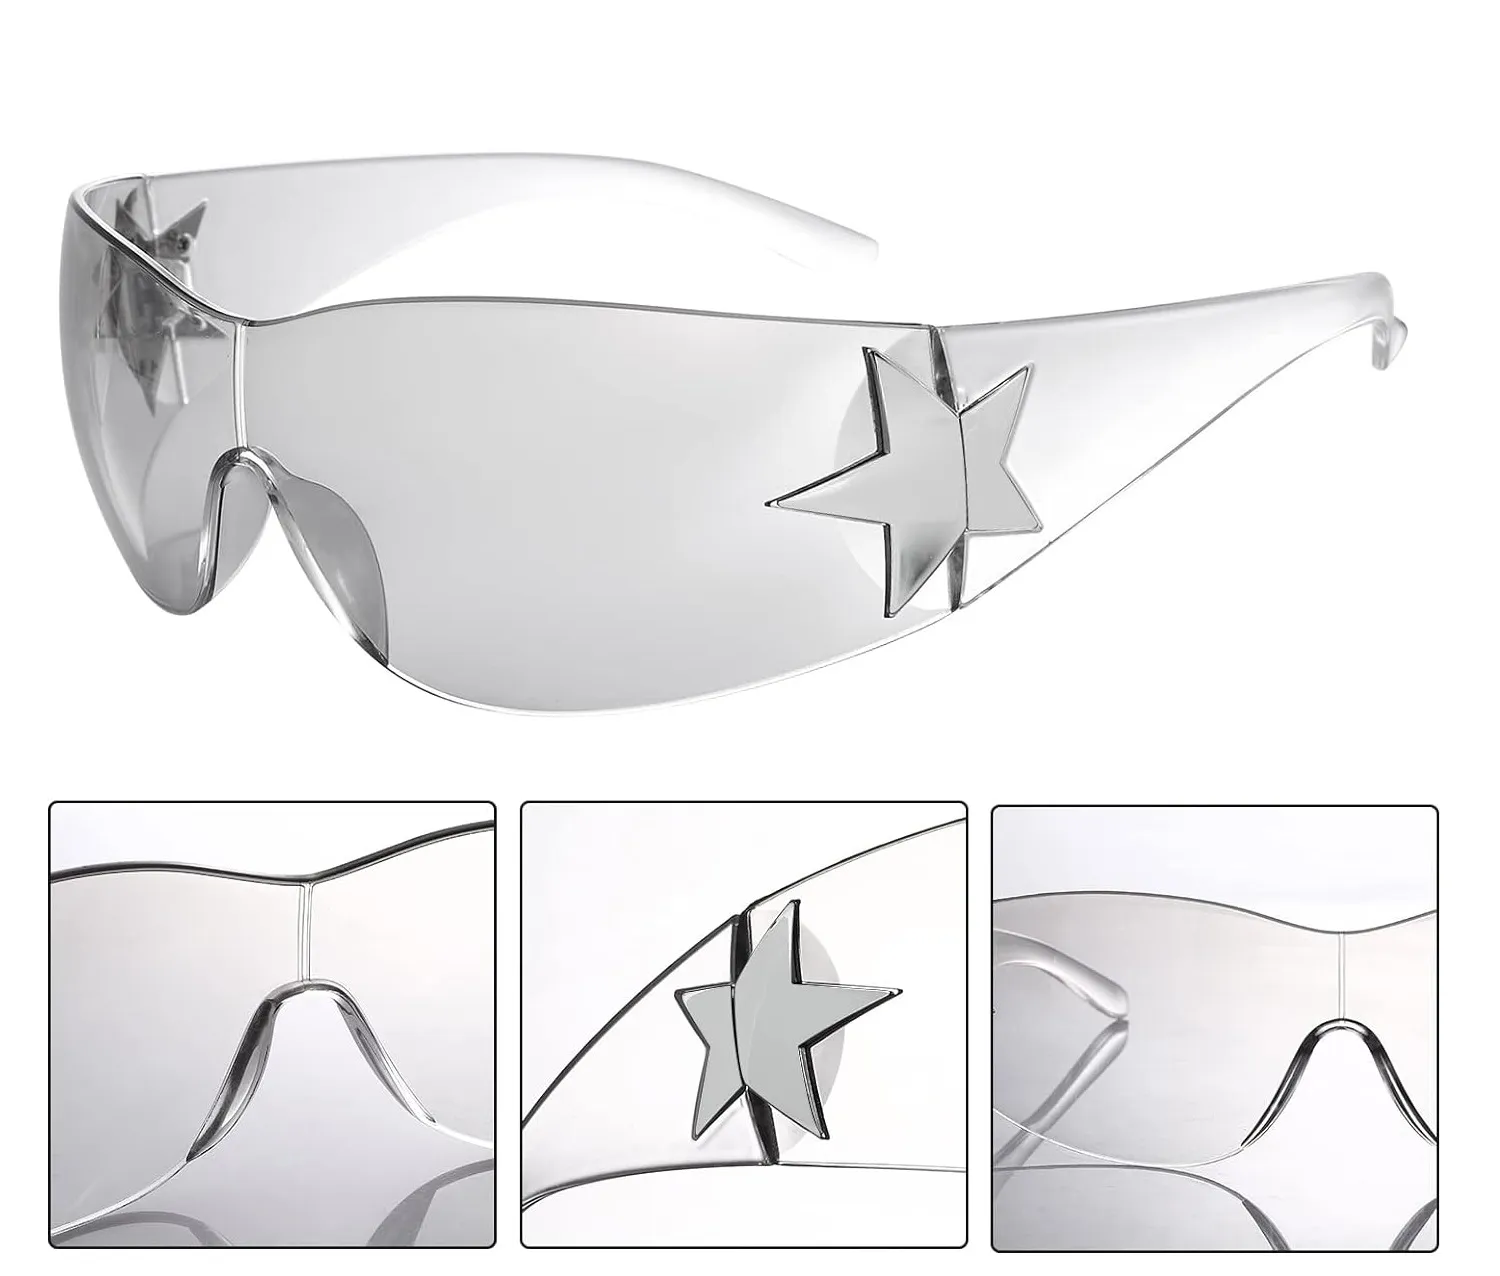 Gafas Lentes De Sol Envolventes Futuristas Unisex Blancas 